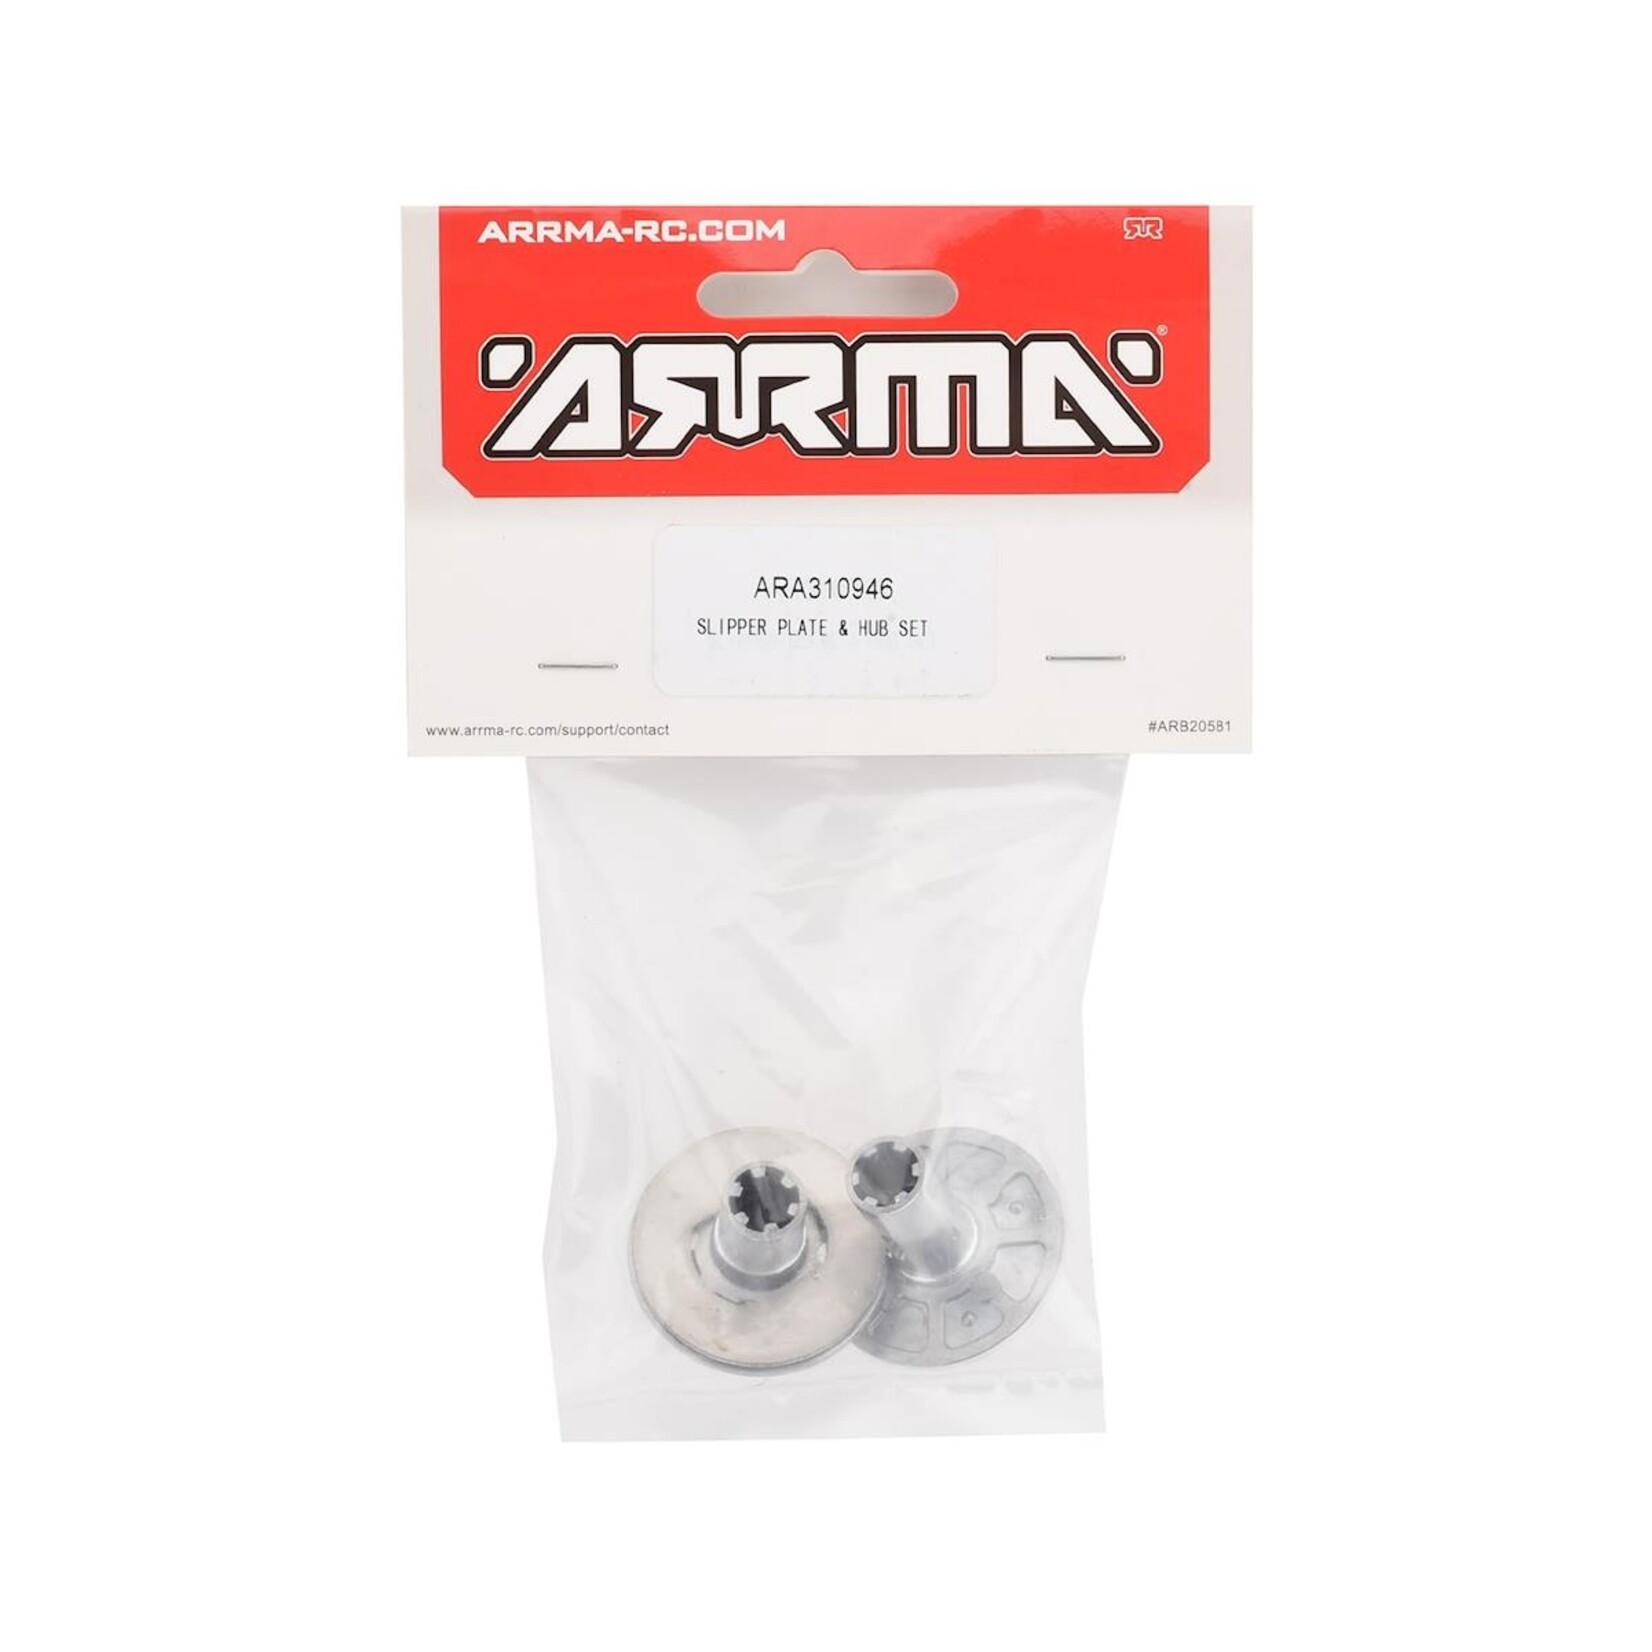 ARRMA Arrma 4S BLX Slipper Plate & Hub Set #ARA310946